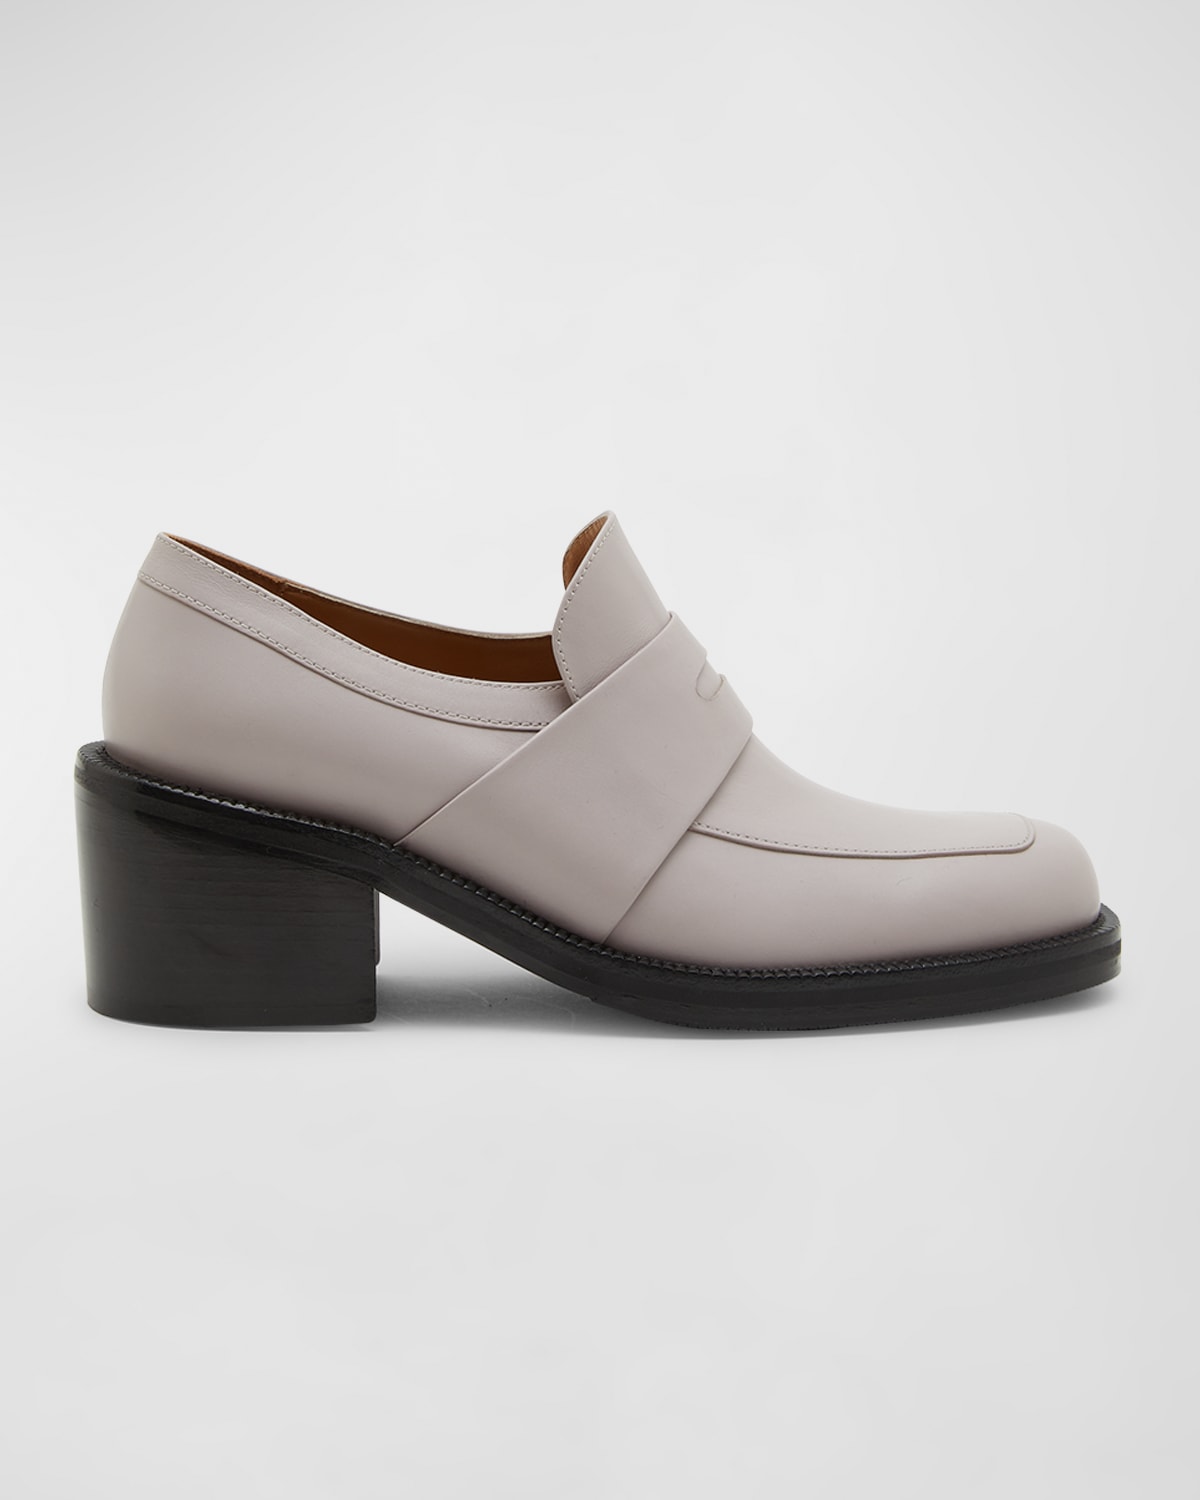 Miu Miu Patent Leather Heeled Penny Loafers | Neiman Marcus